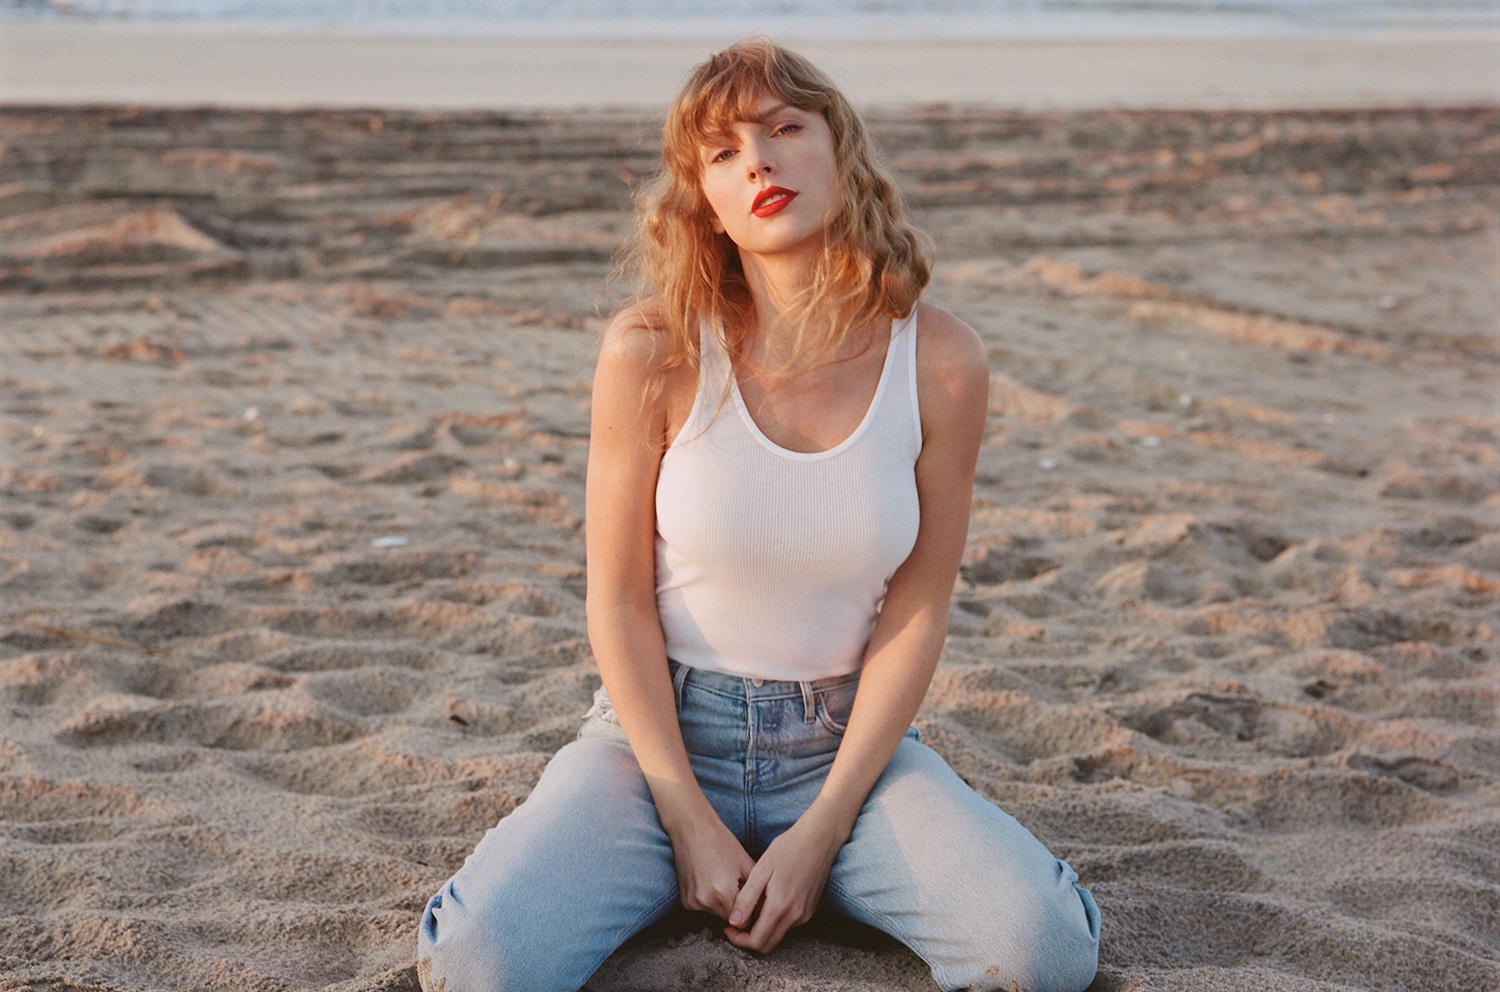 Taylor Swift 1989 Taylors Version © Beth Garrabrant 